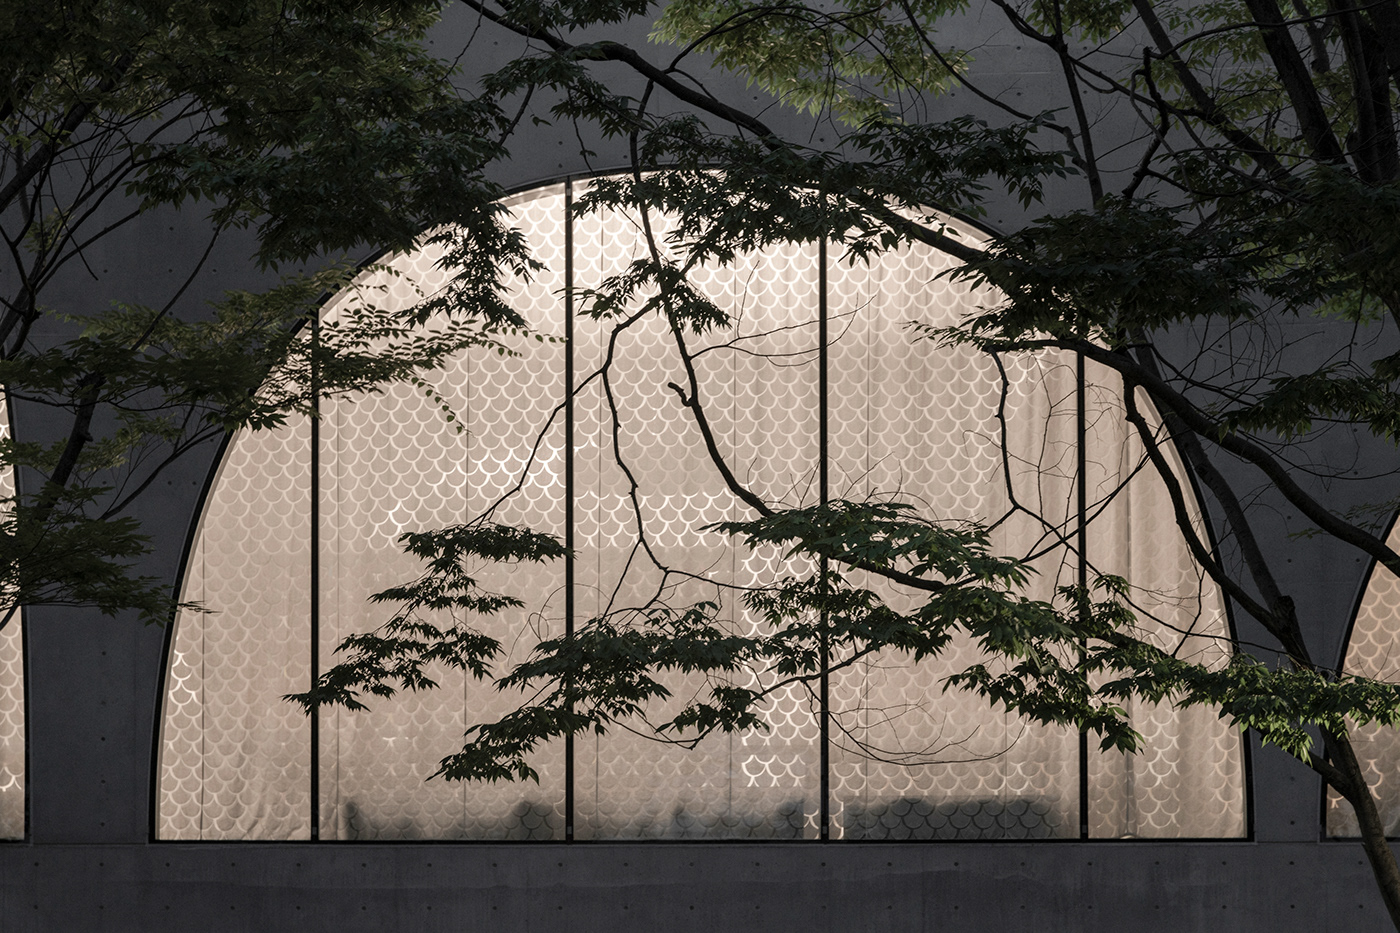 tokyo japan Architecture Photography arquitectura architecture architectural photography бетон concrete